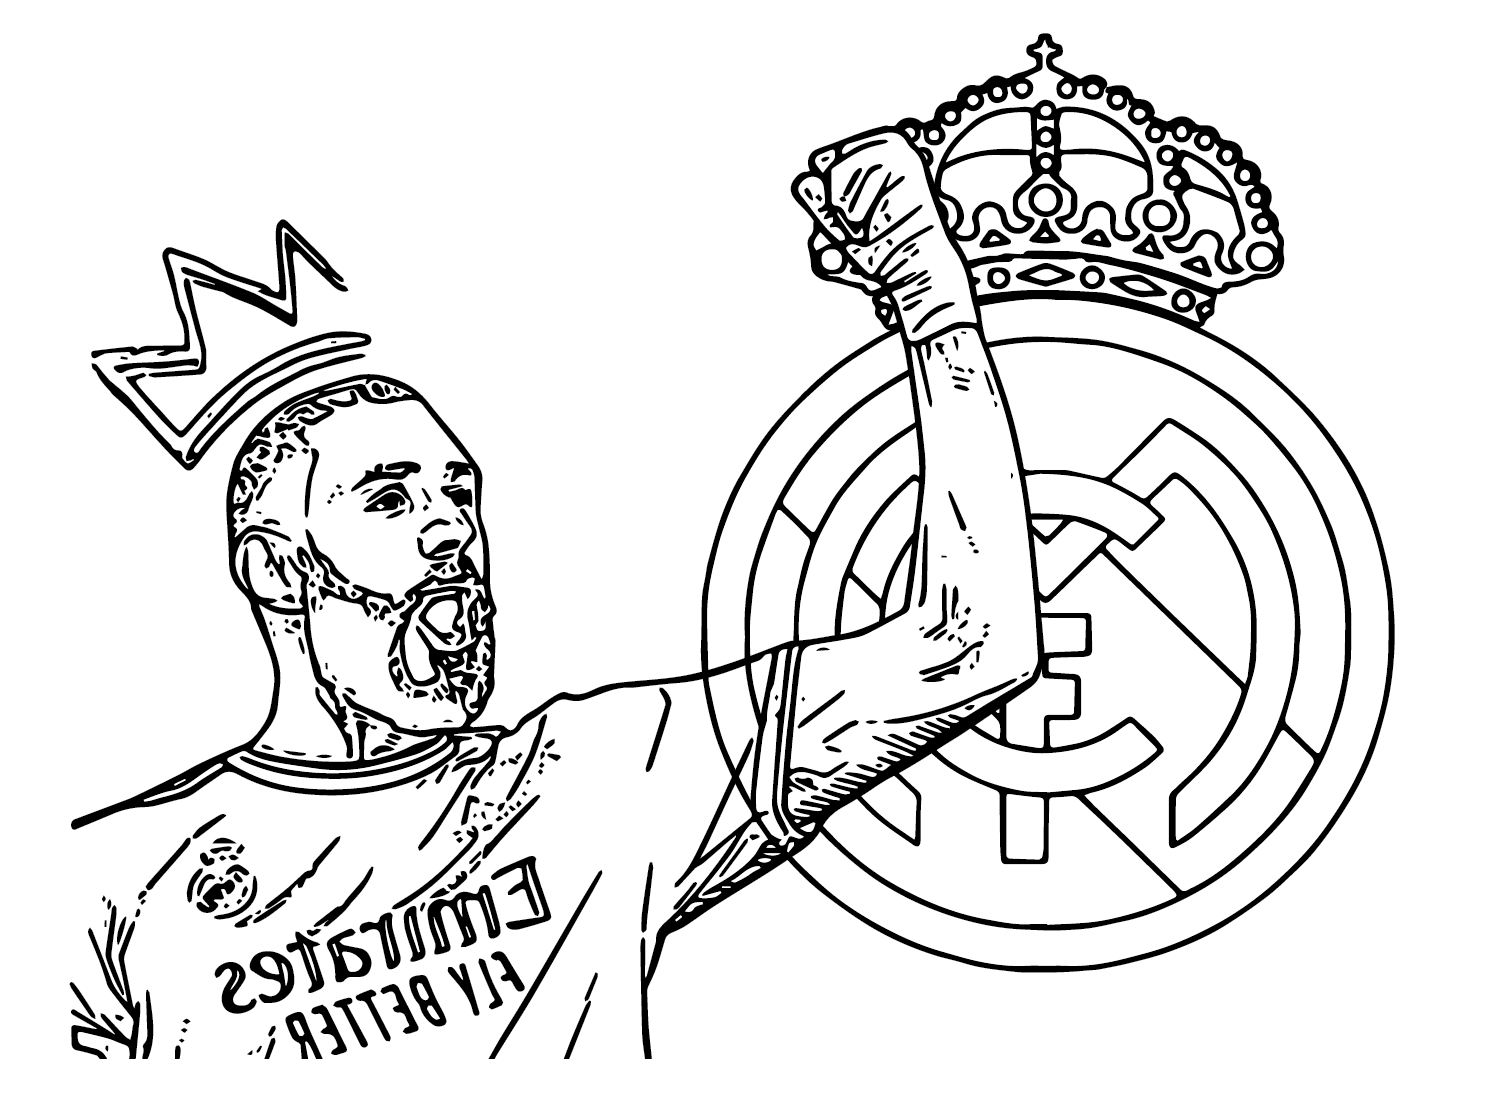 Karim Benzema tot Kleur van Karim Benzema